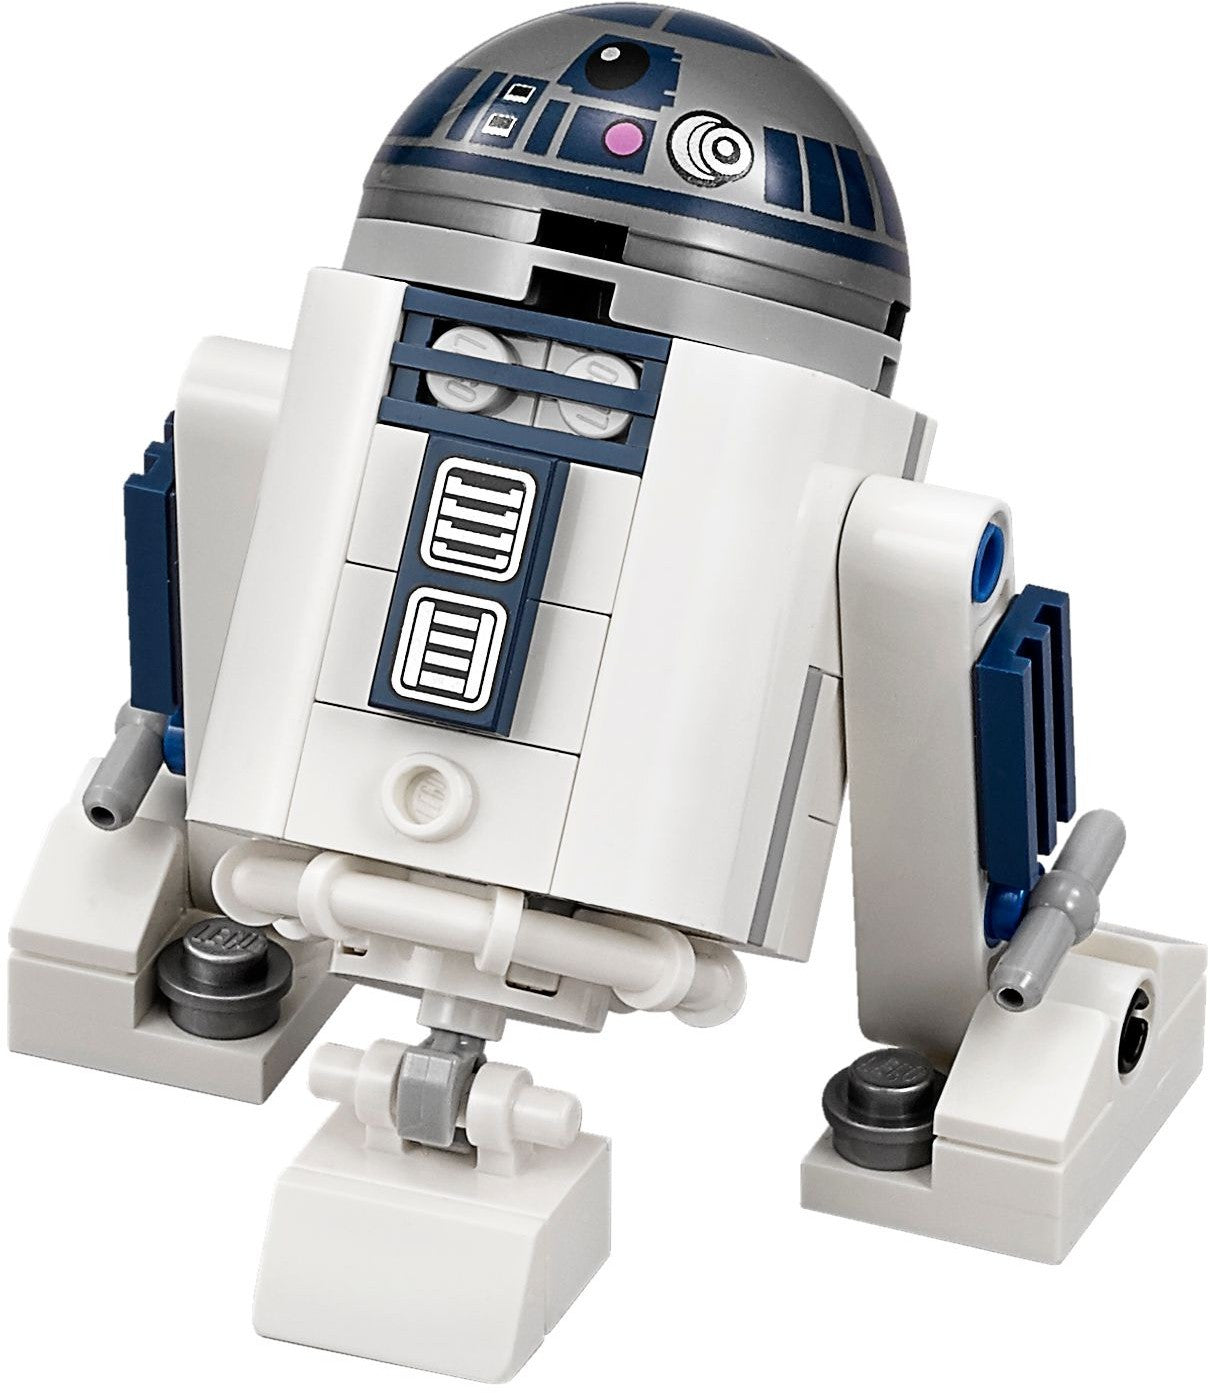 Lego Star Wars 30611 Polybag R2-D2 – Display Frames for Lego Minifigures